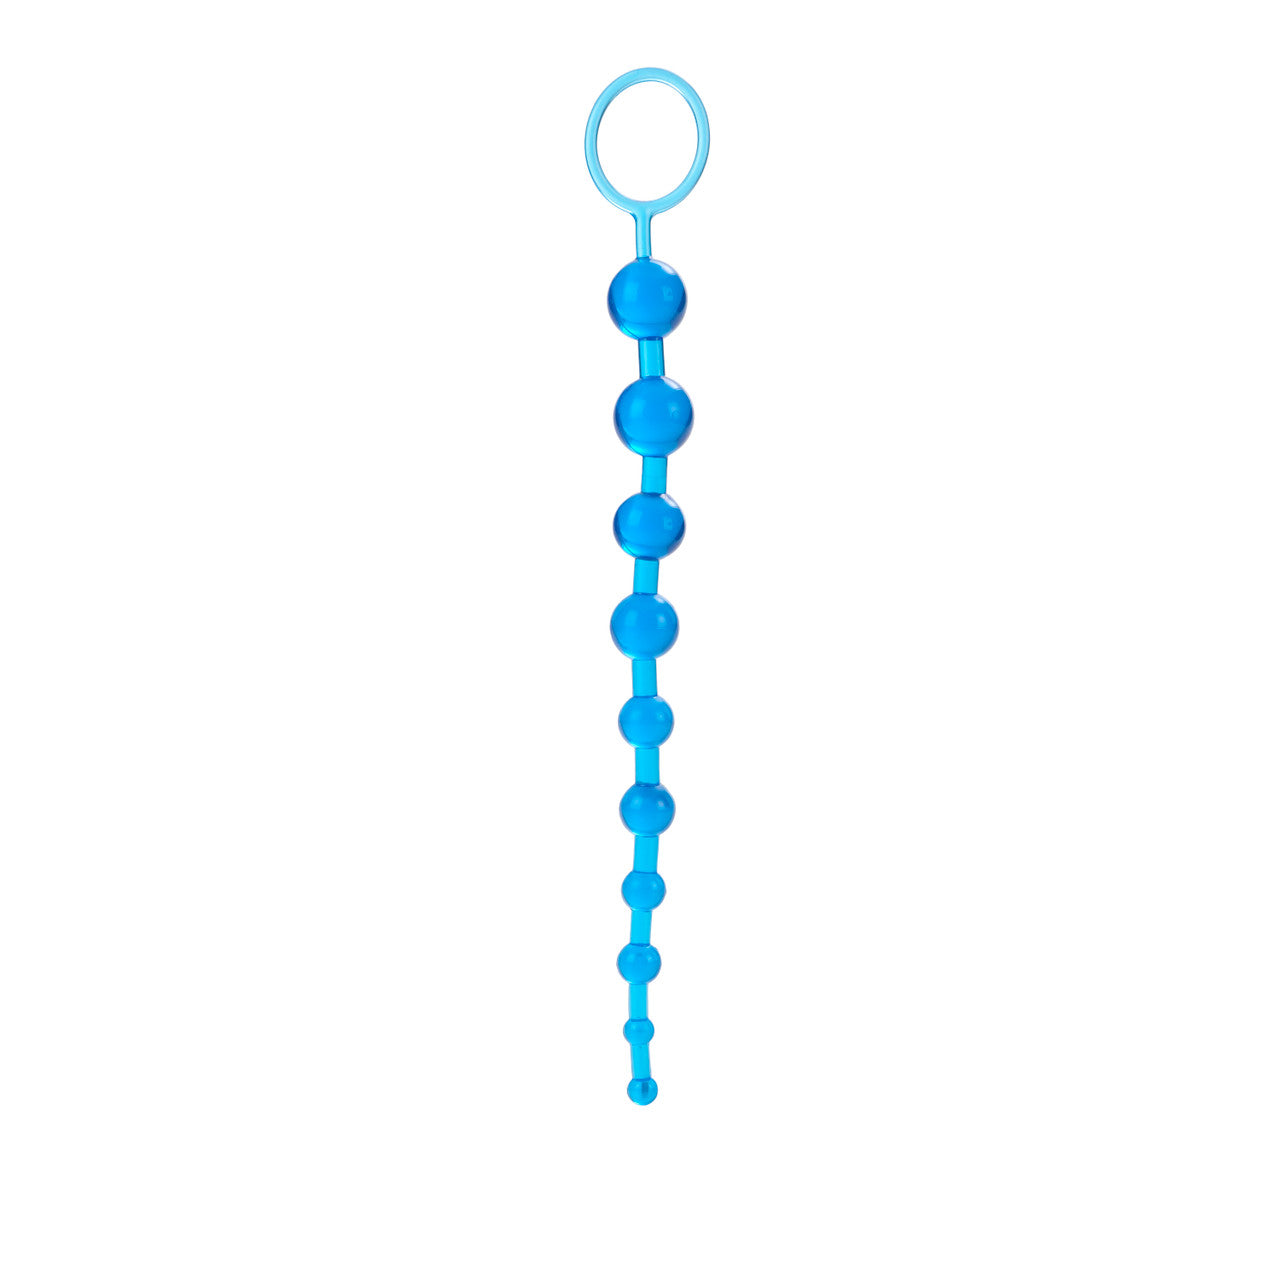 X-10 Anal Beads - Blue